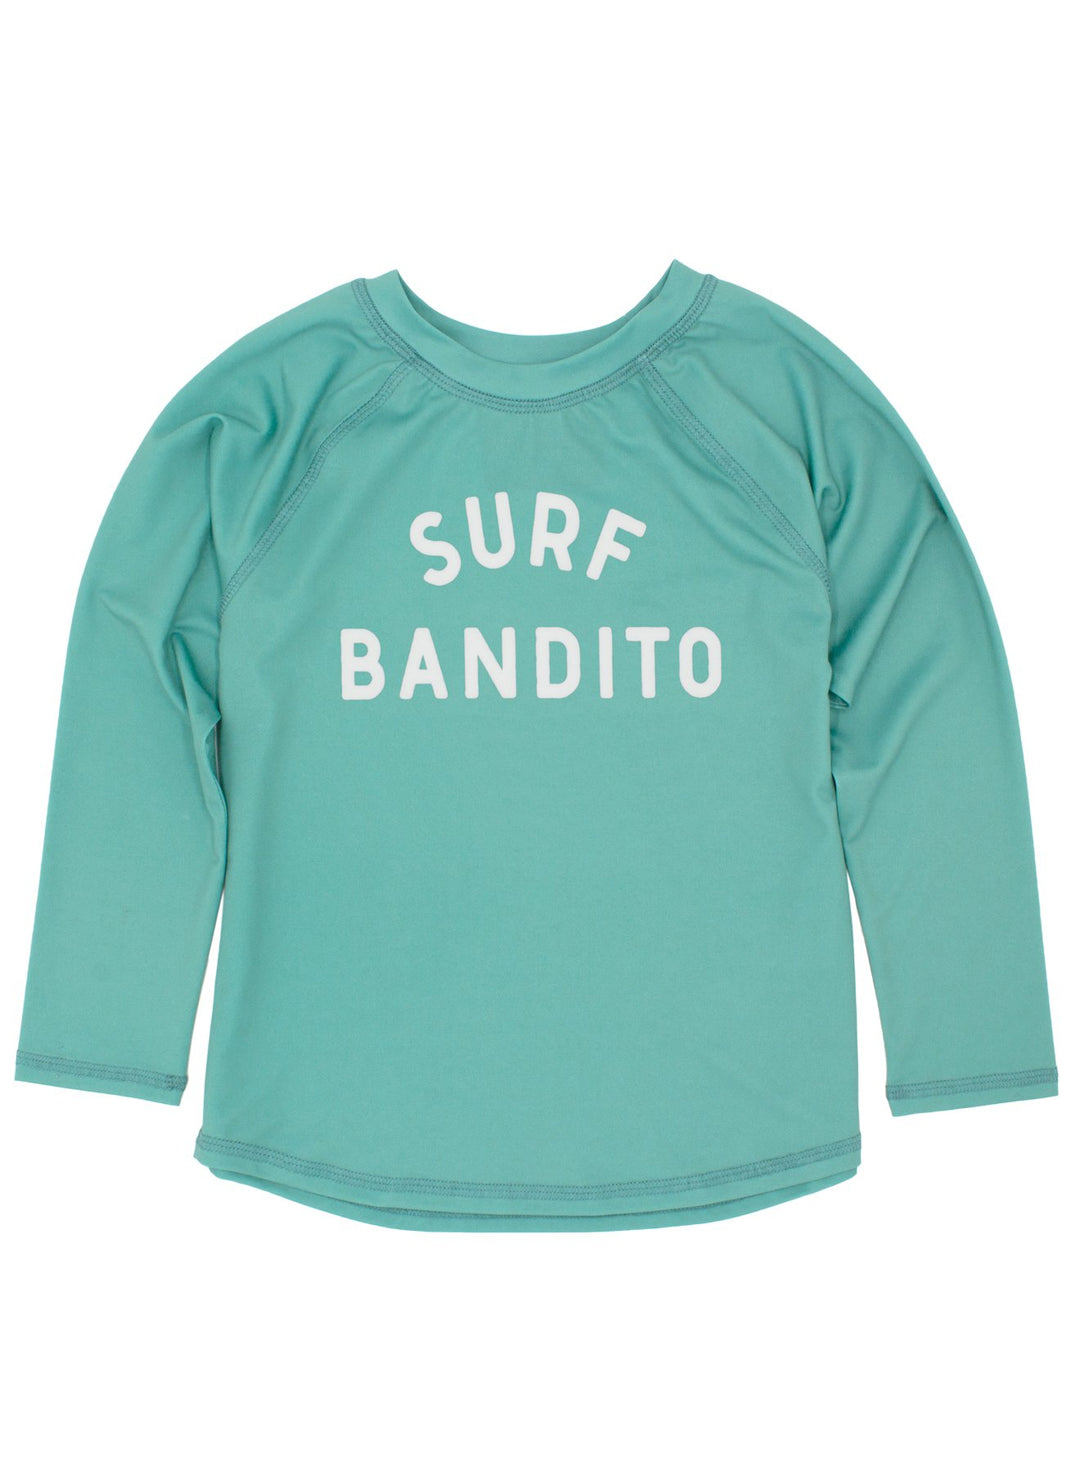 Surf Bandito Long Sleeve Swimsuit Rashguard